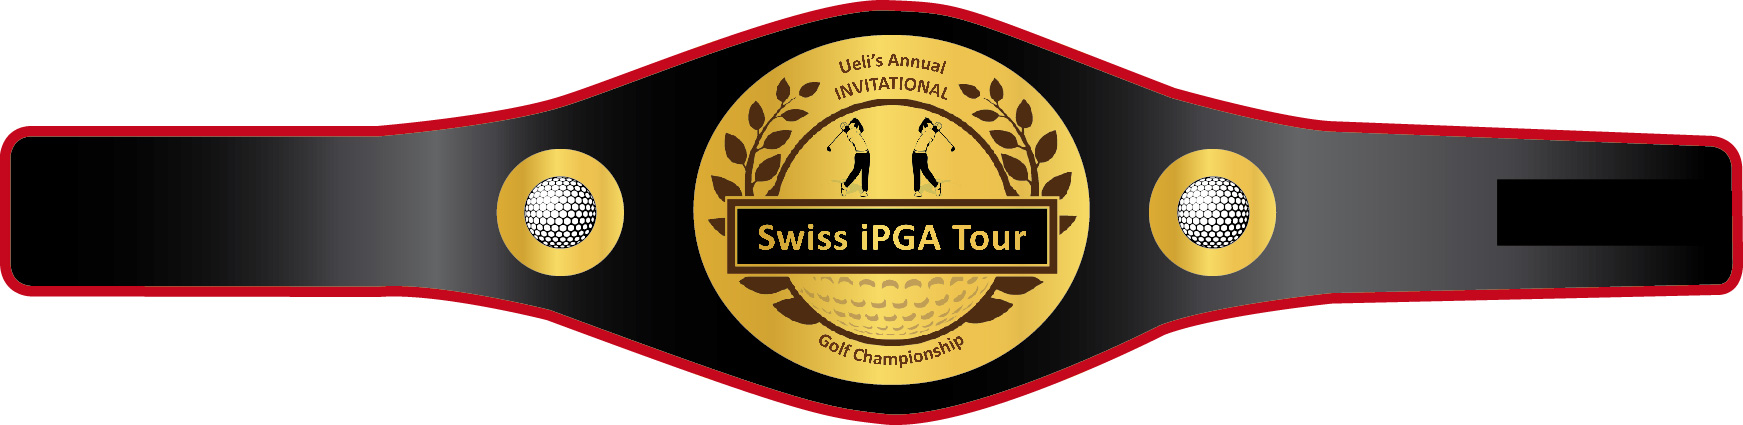 Swiss IPGA Tour Golf Champion Grtel